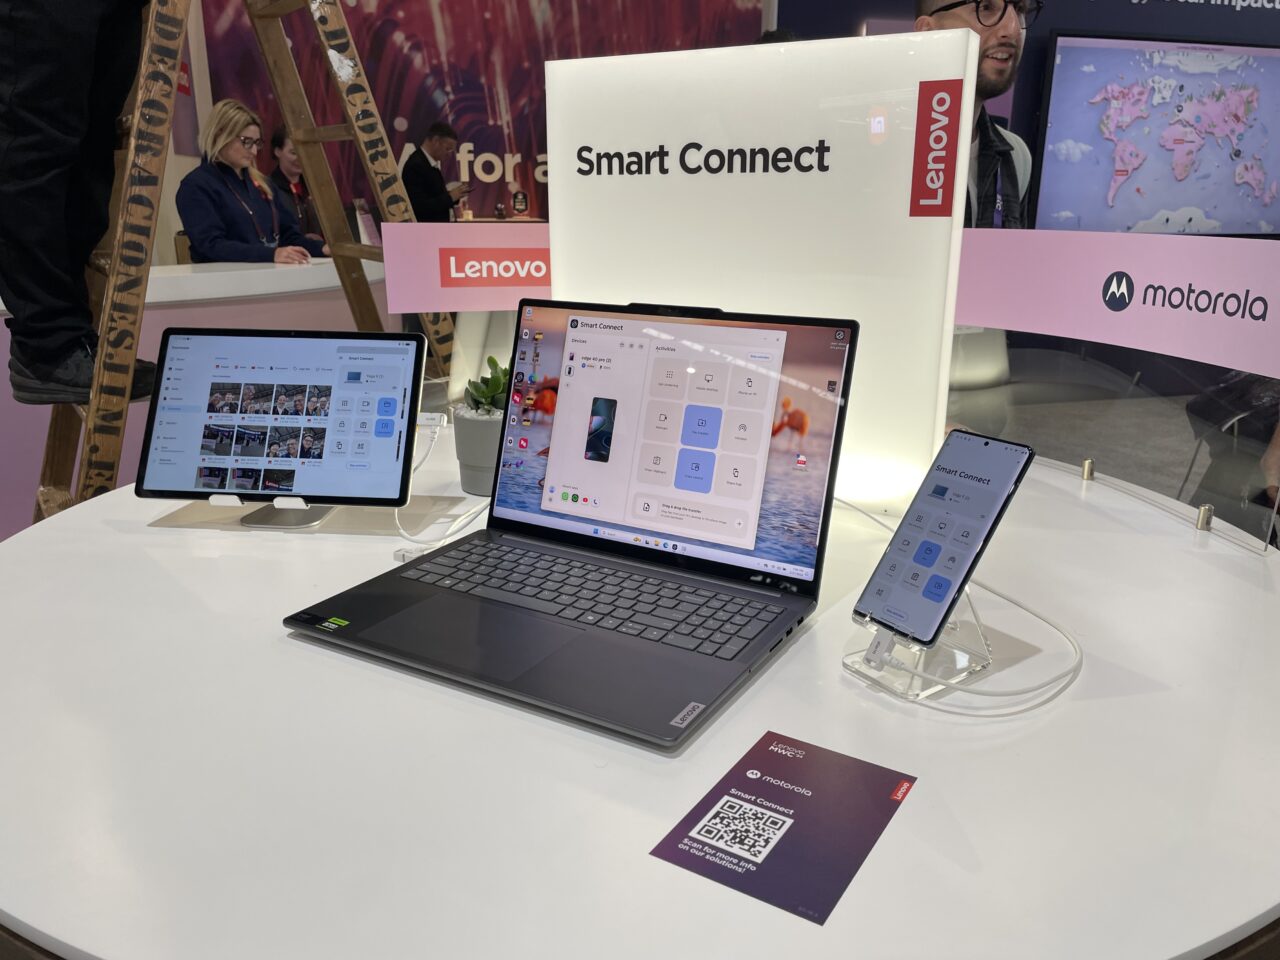 Stoisko Lenovo z laptopem, monitorem i smartfonem prezentującymi technologię "Smart Connect".